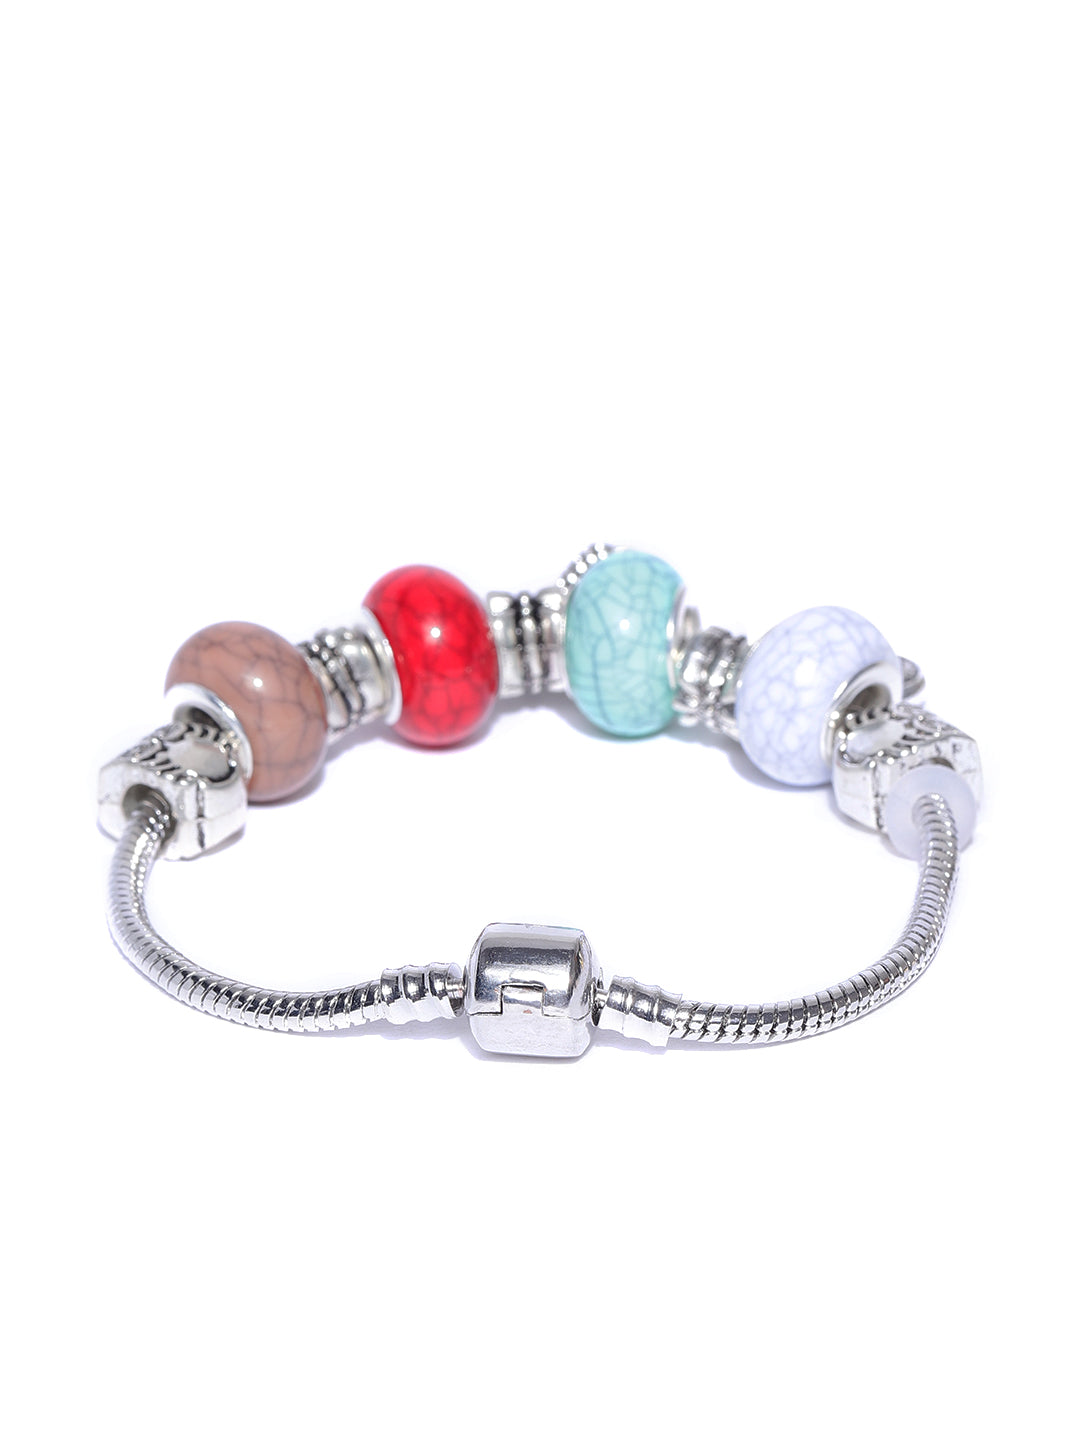 Stylish Charm Bracelet For Women & Girls